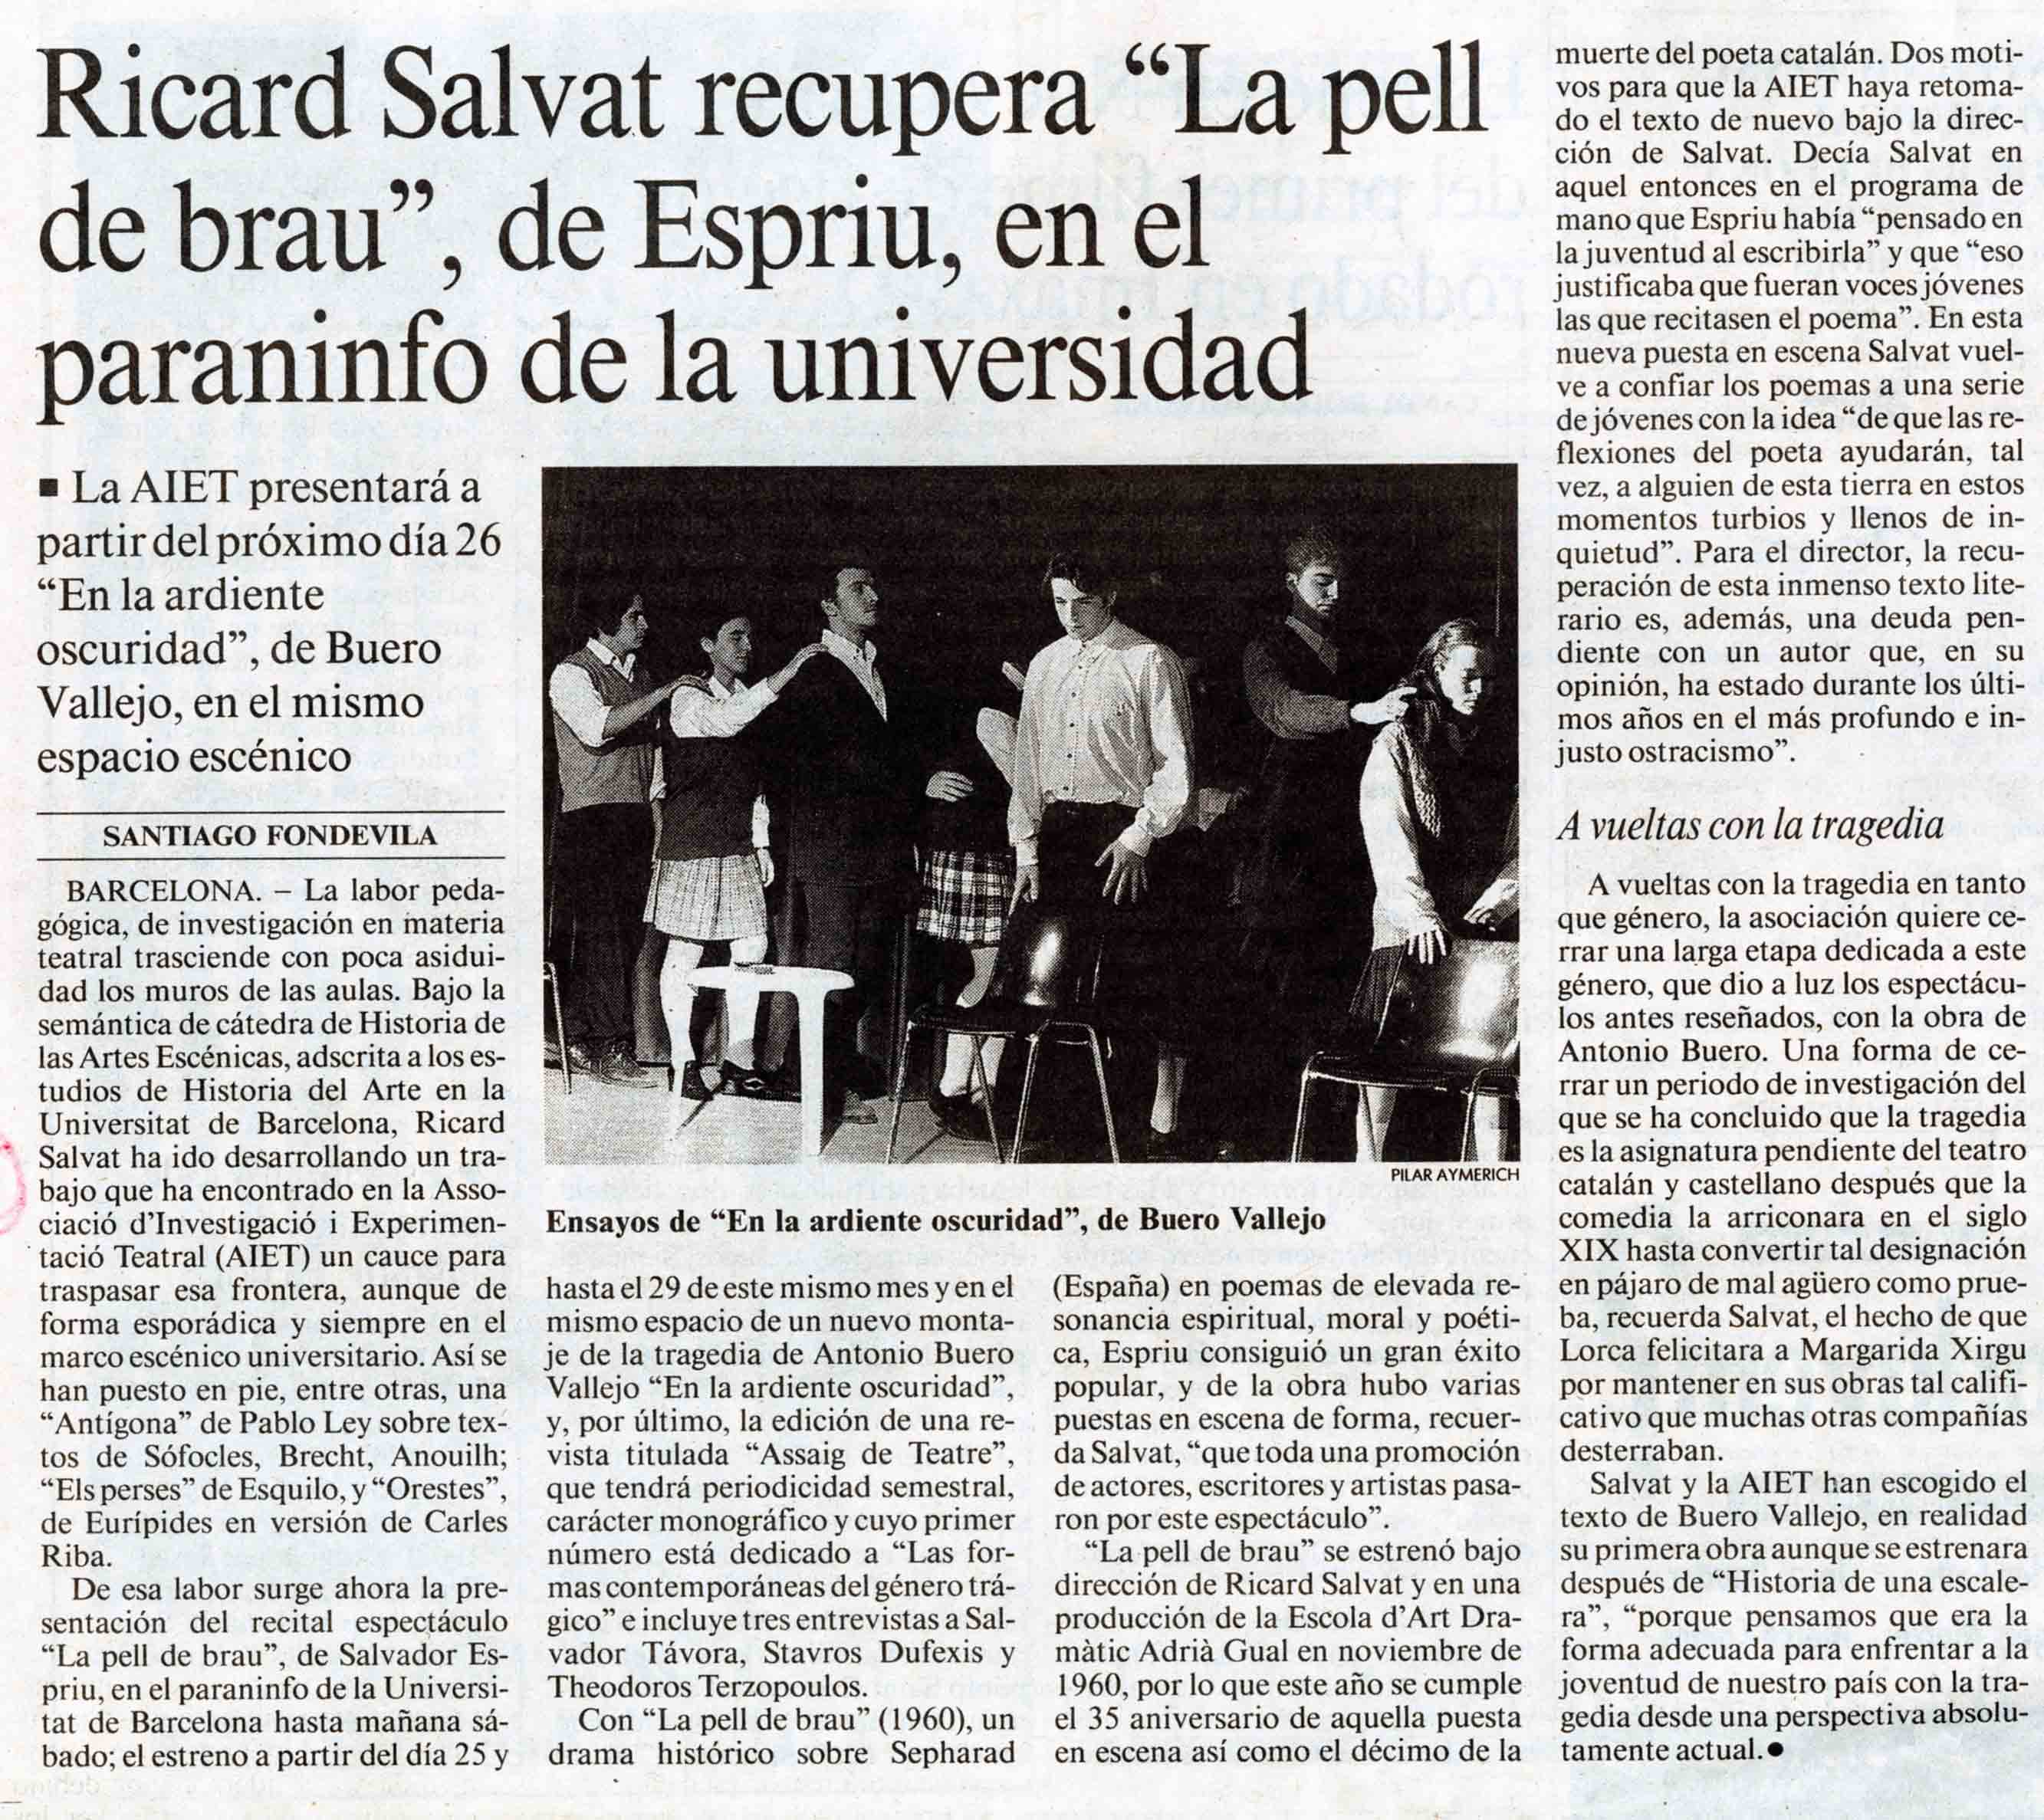 Premsa. Santiago Fondevila. El Periódico, 21/04/1995